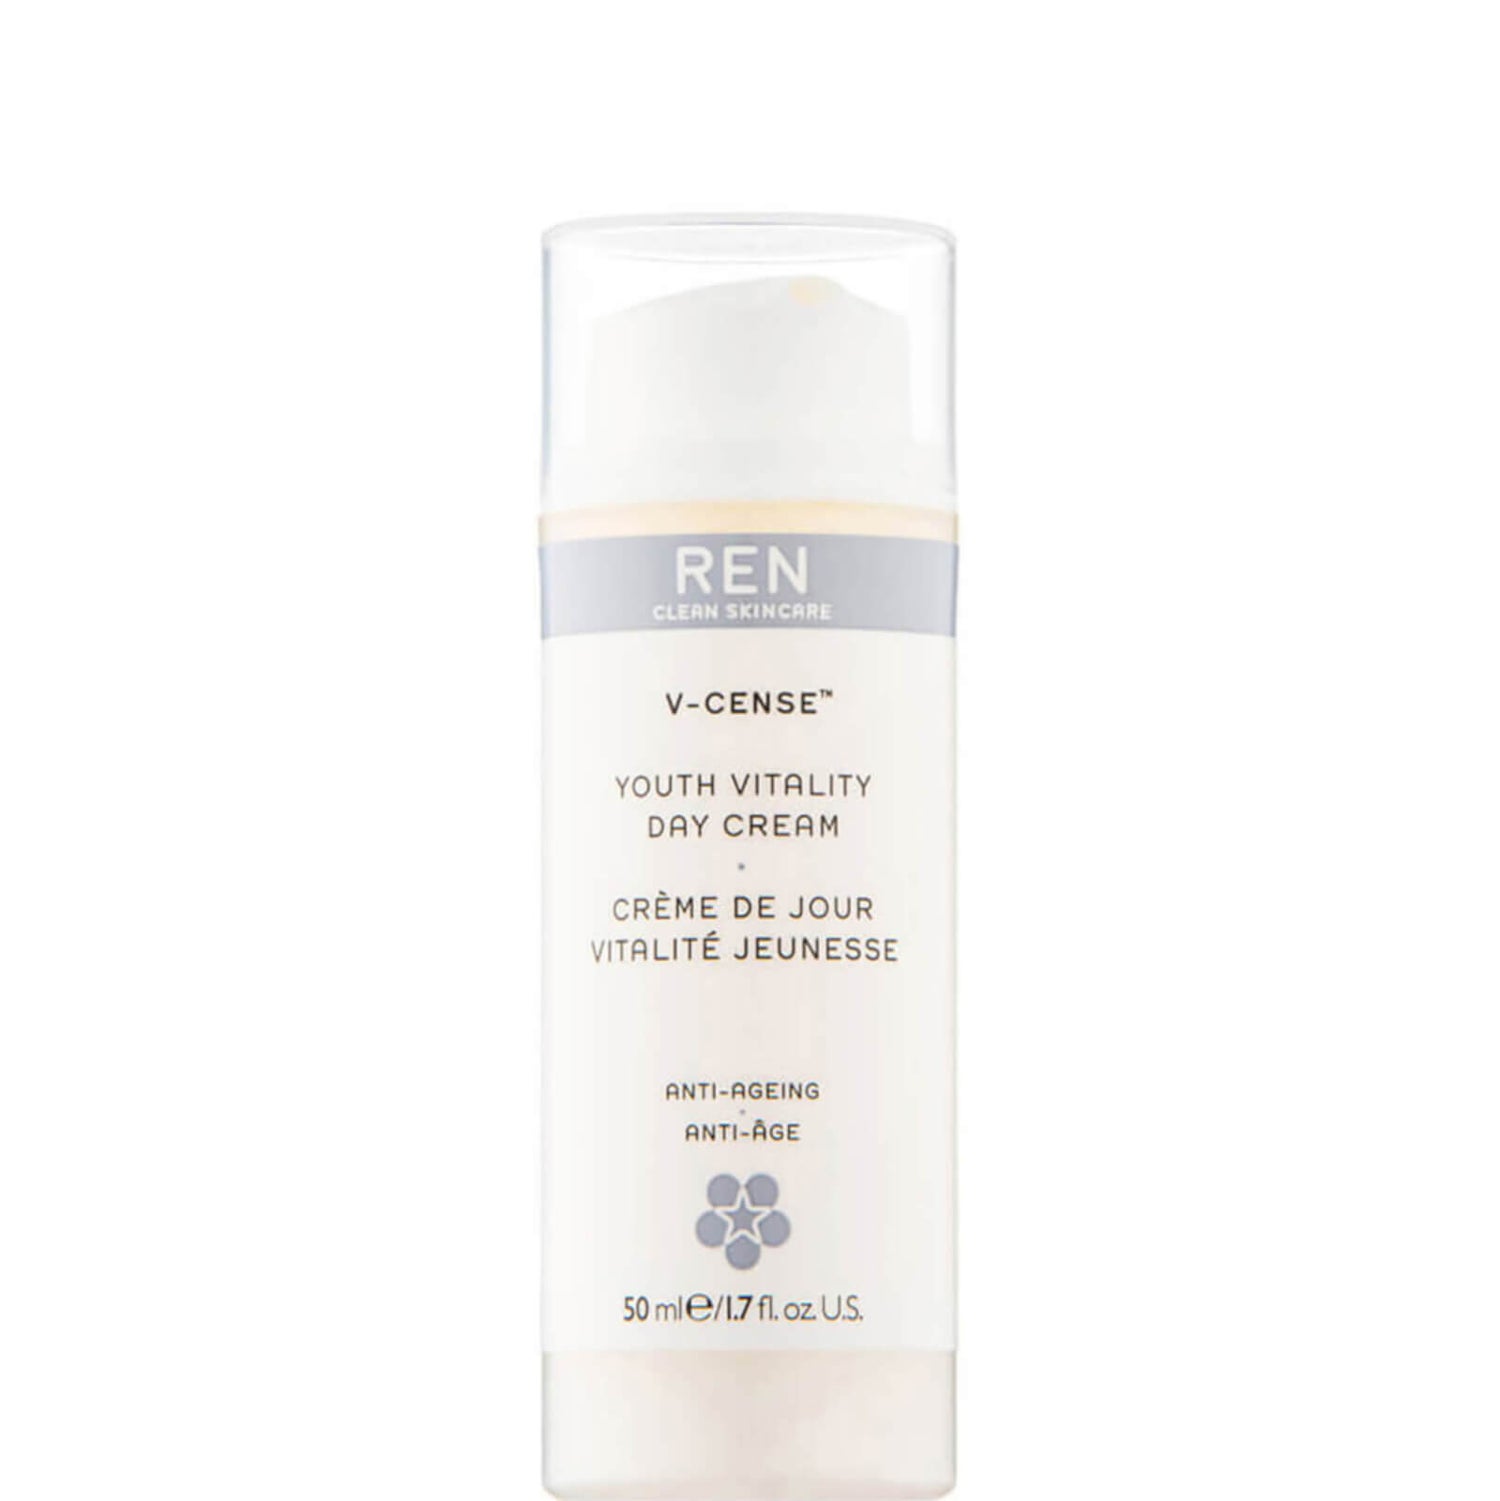 REN Clean Skincare V-Cense Youth Vitality Day Cream 1.7 fl. oz.